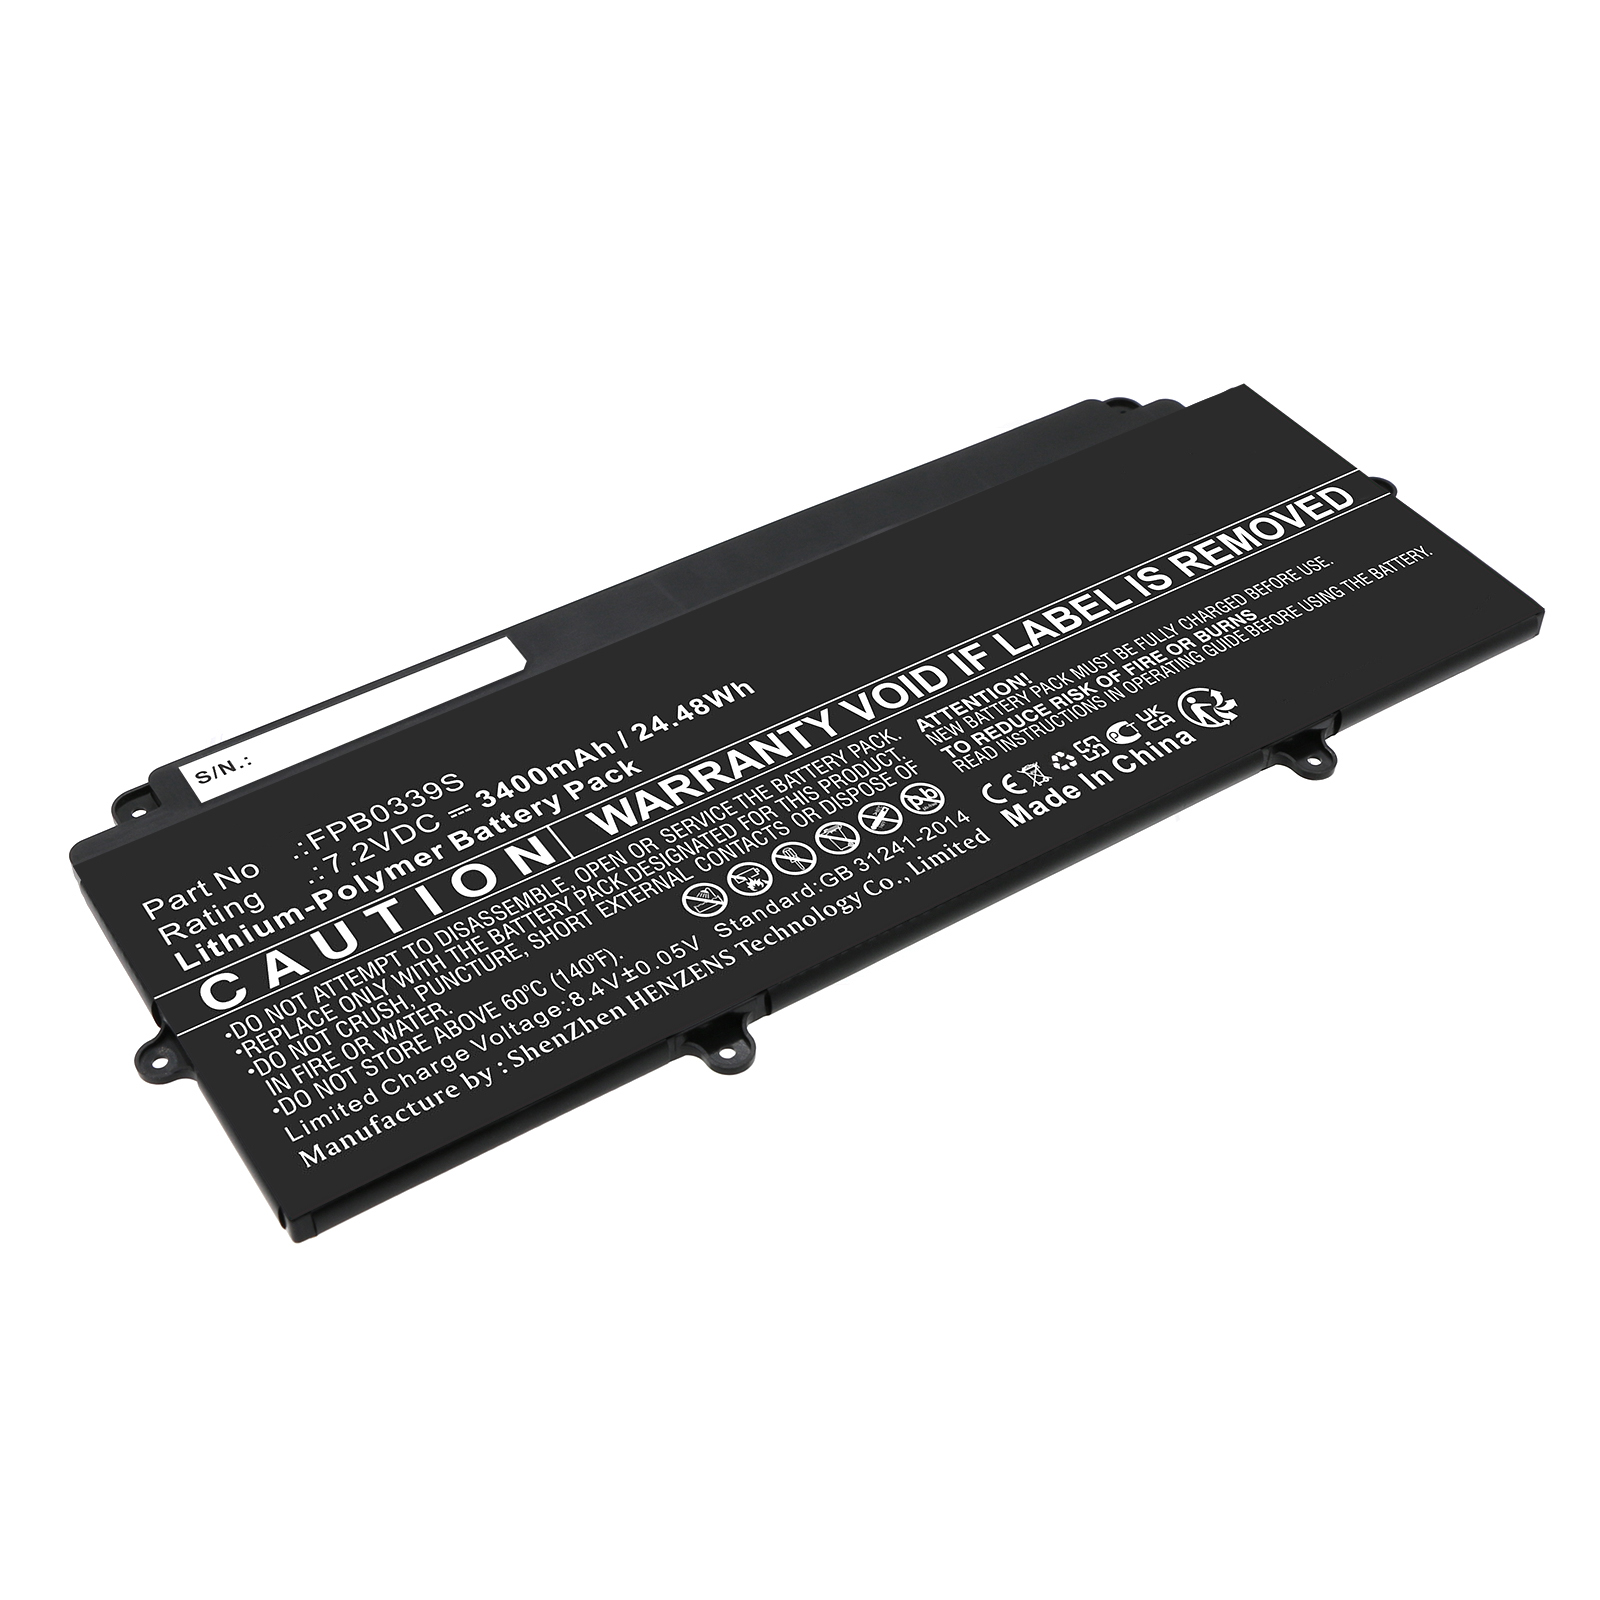 Synergy Digital Laptop Battery, Compatible with Fujitsu CP737633-01 Laptop Battery (Li-Pol, 7.2V, 3400mAh)